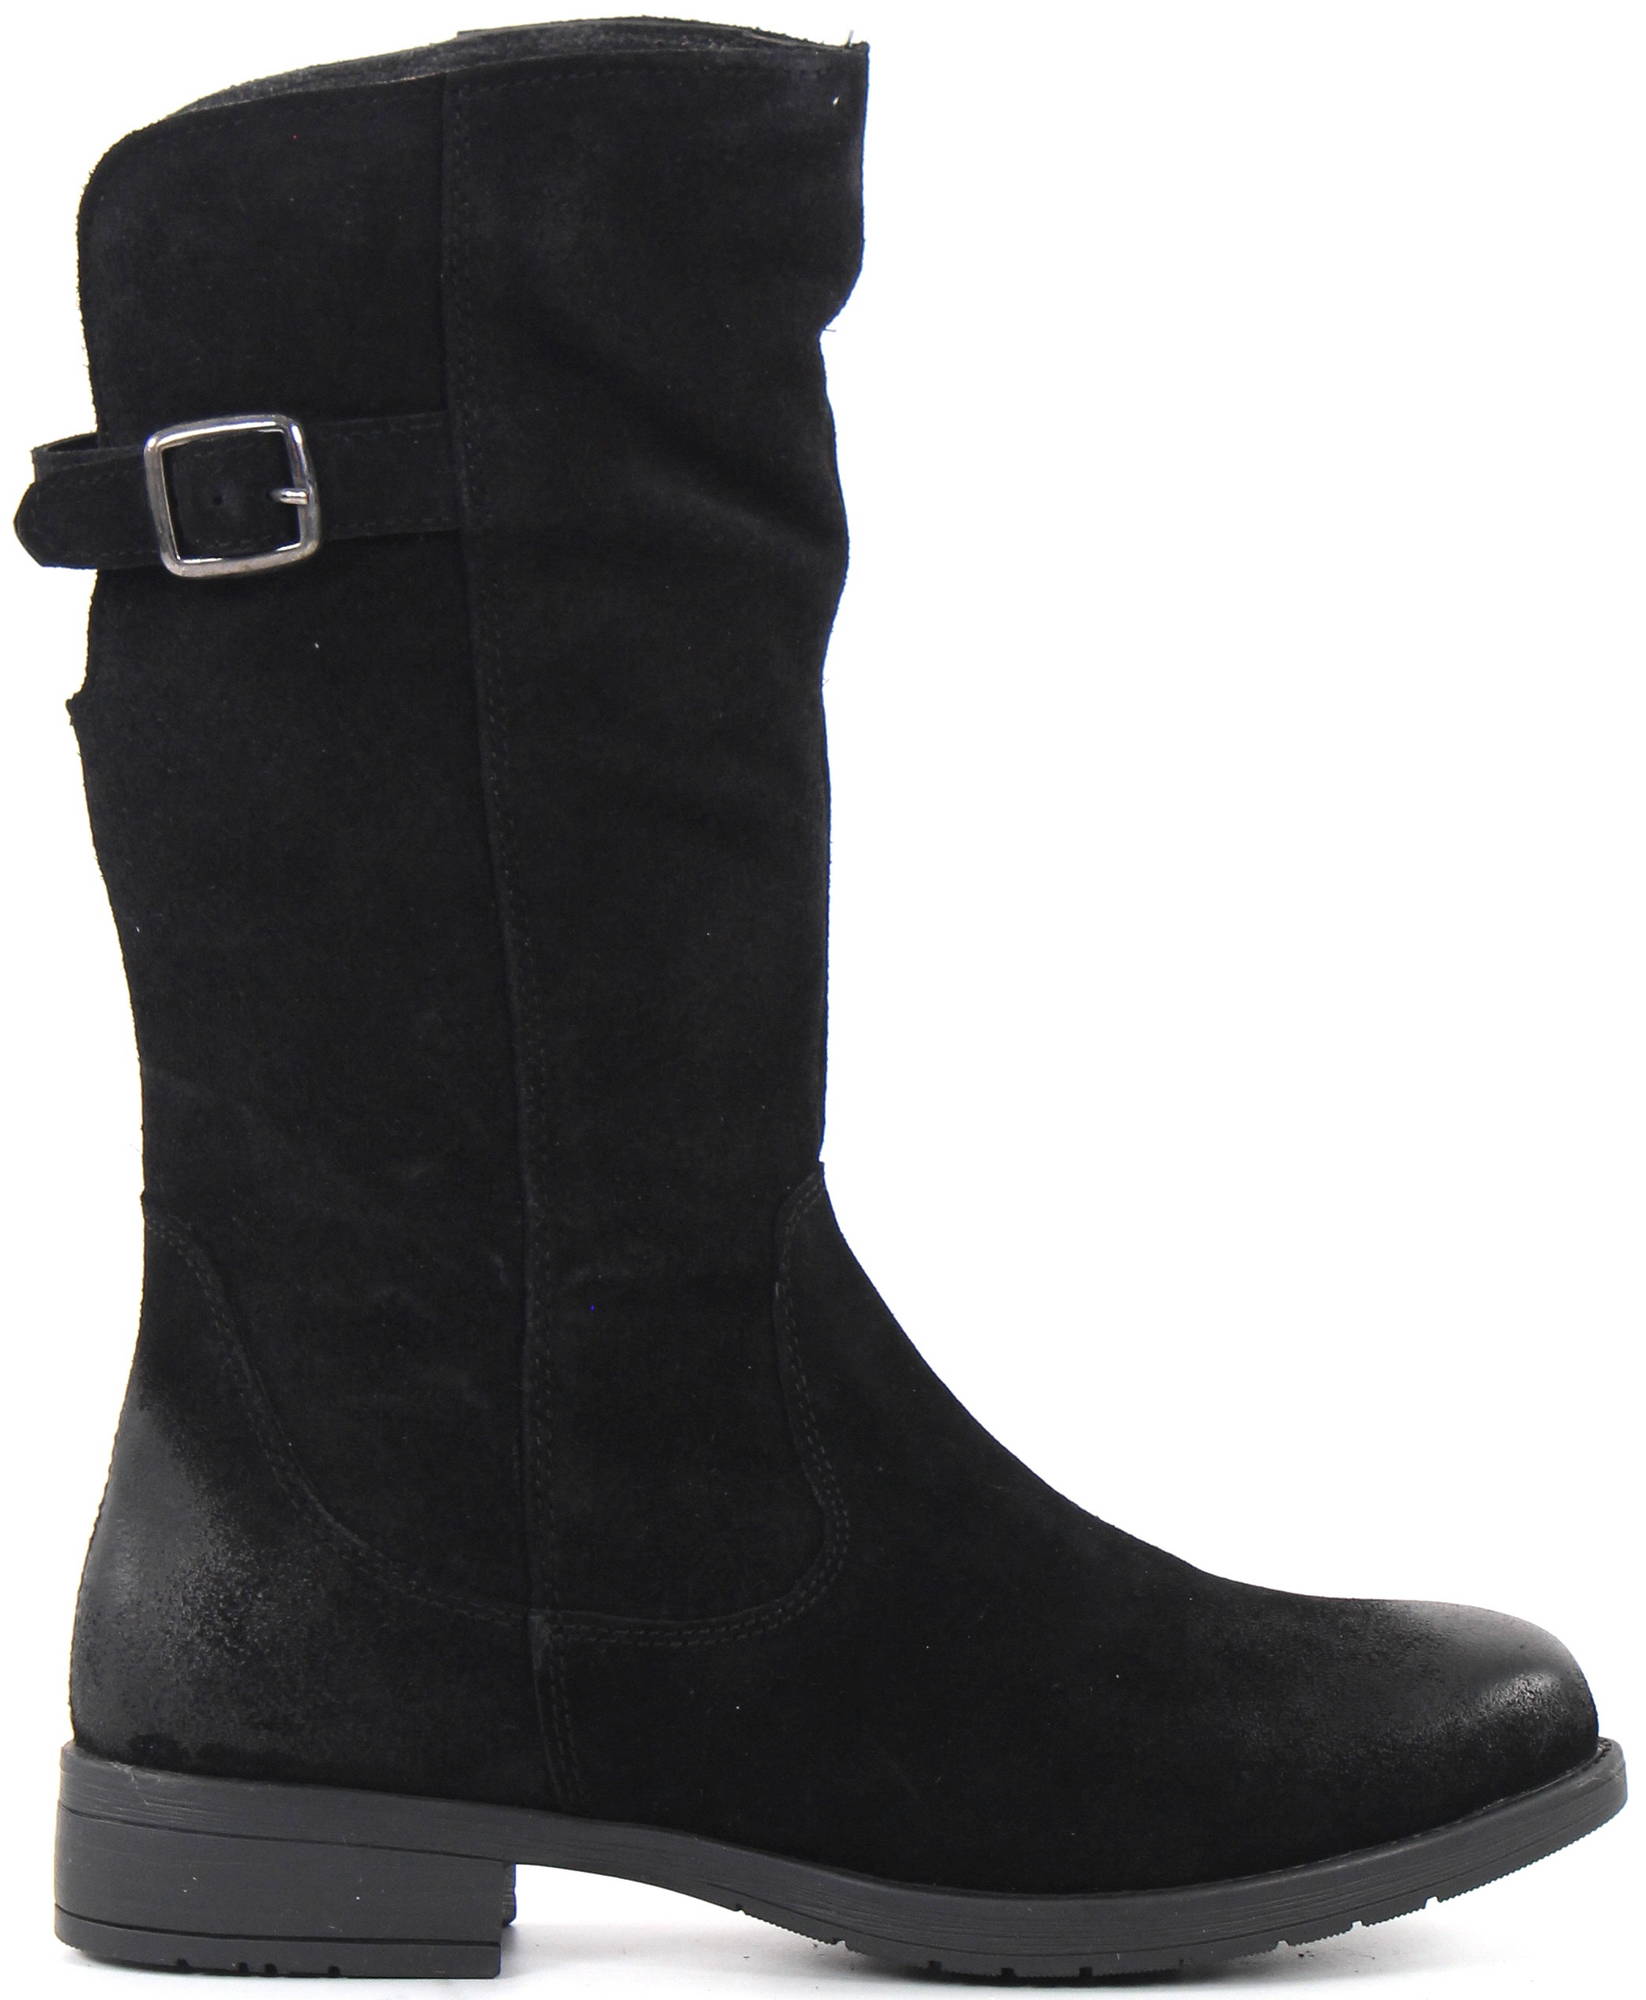 Duffy Boots 60-25851, Black - Stilettoshop.eu webstore